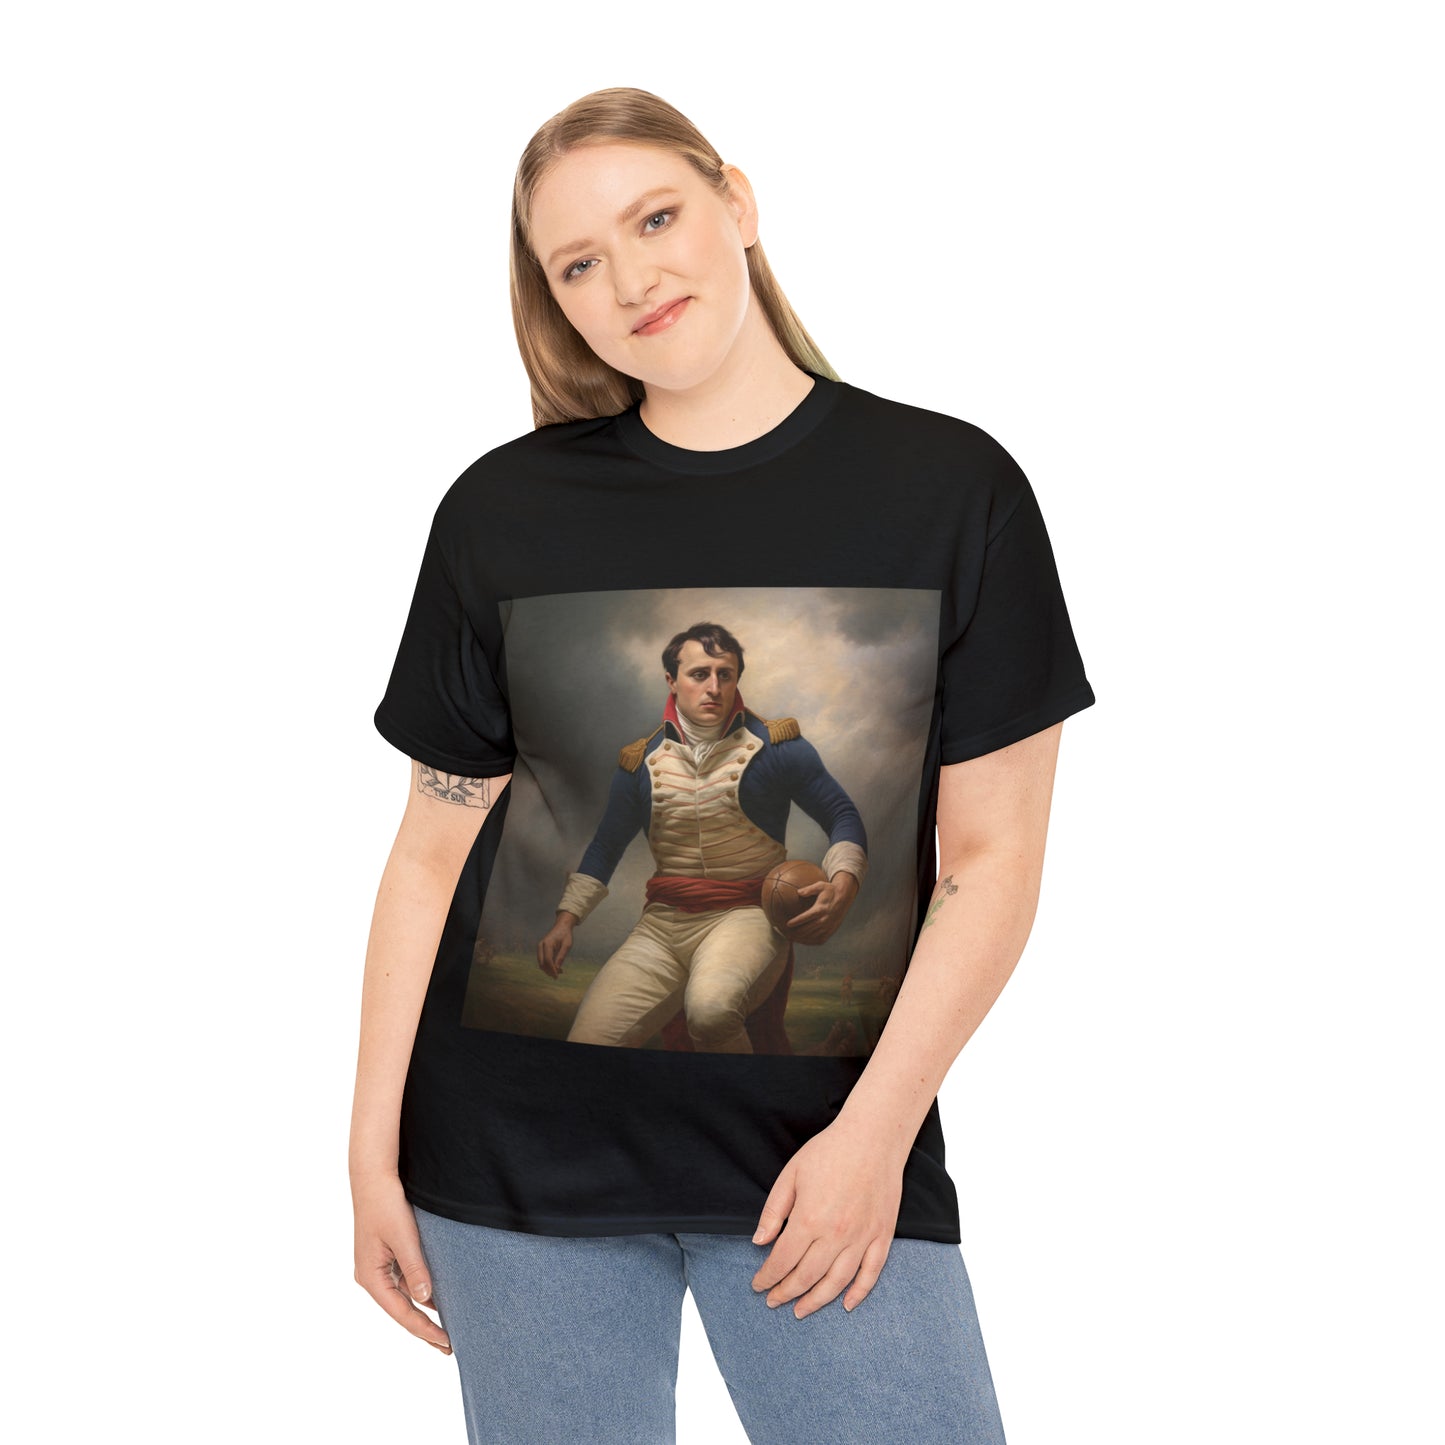 Napoleon Rugby - dark shirts